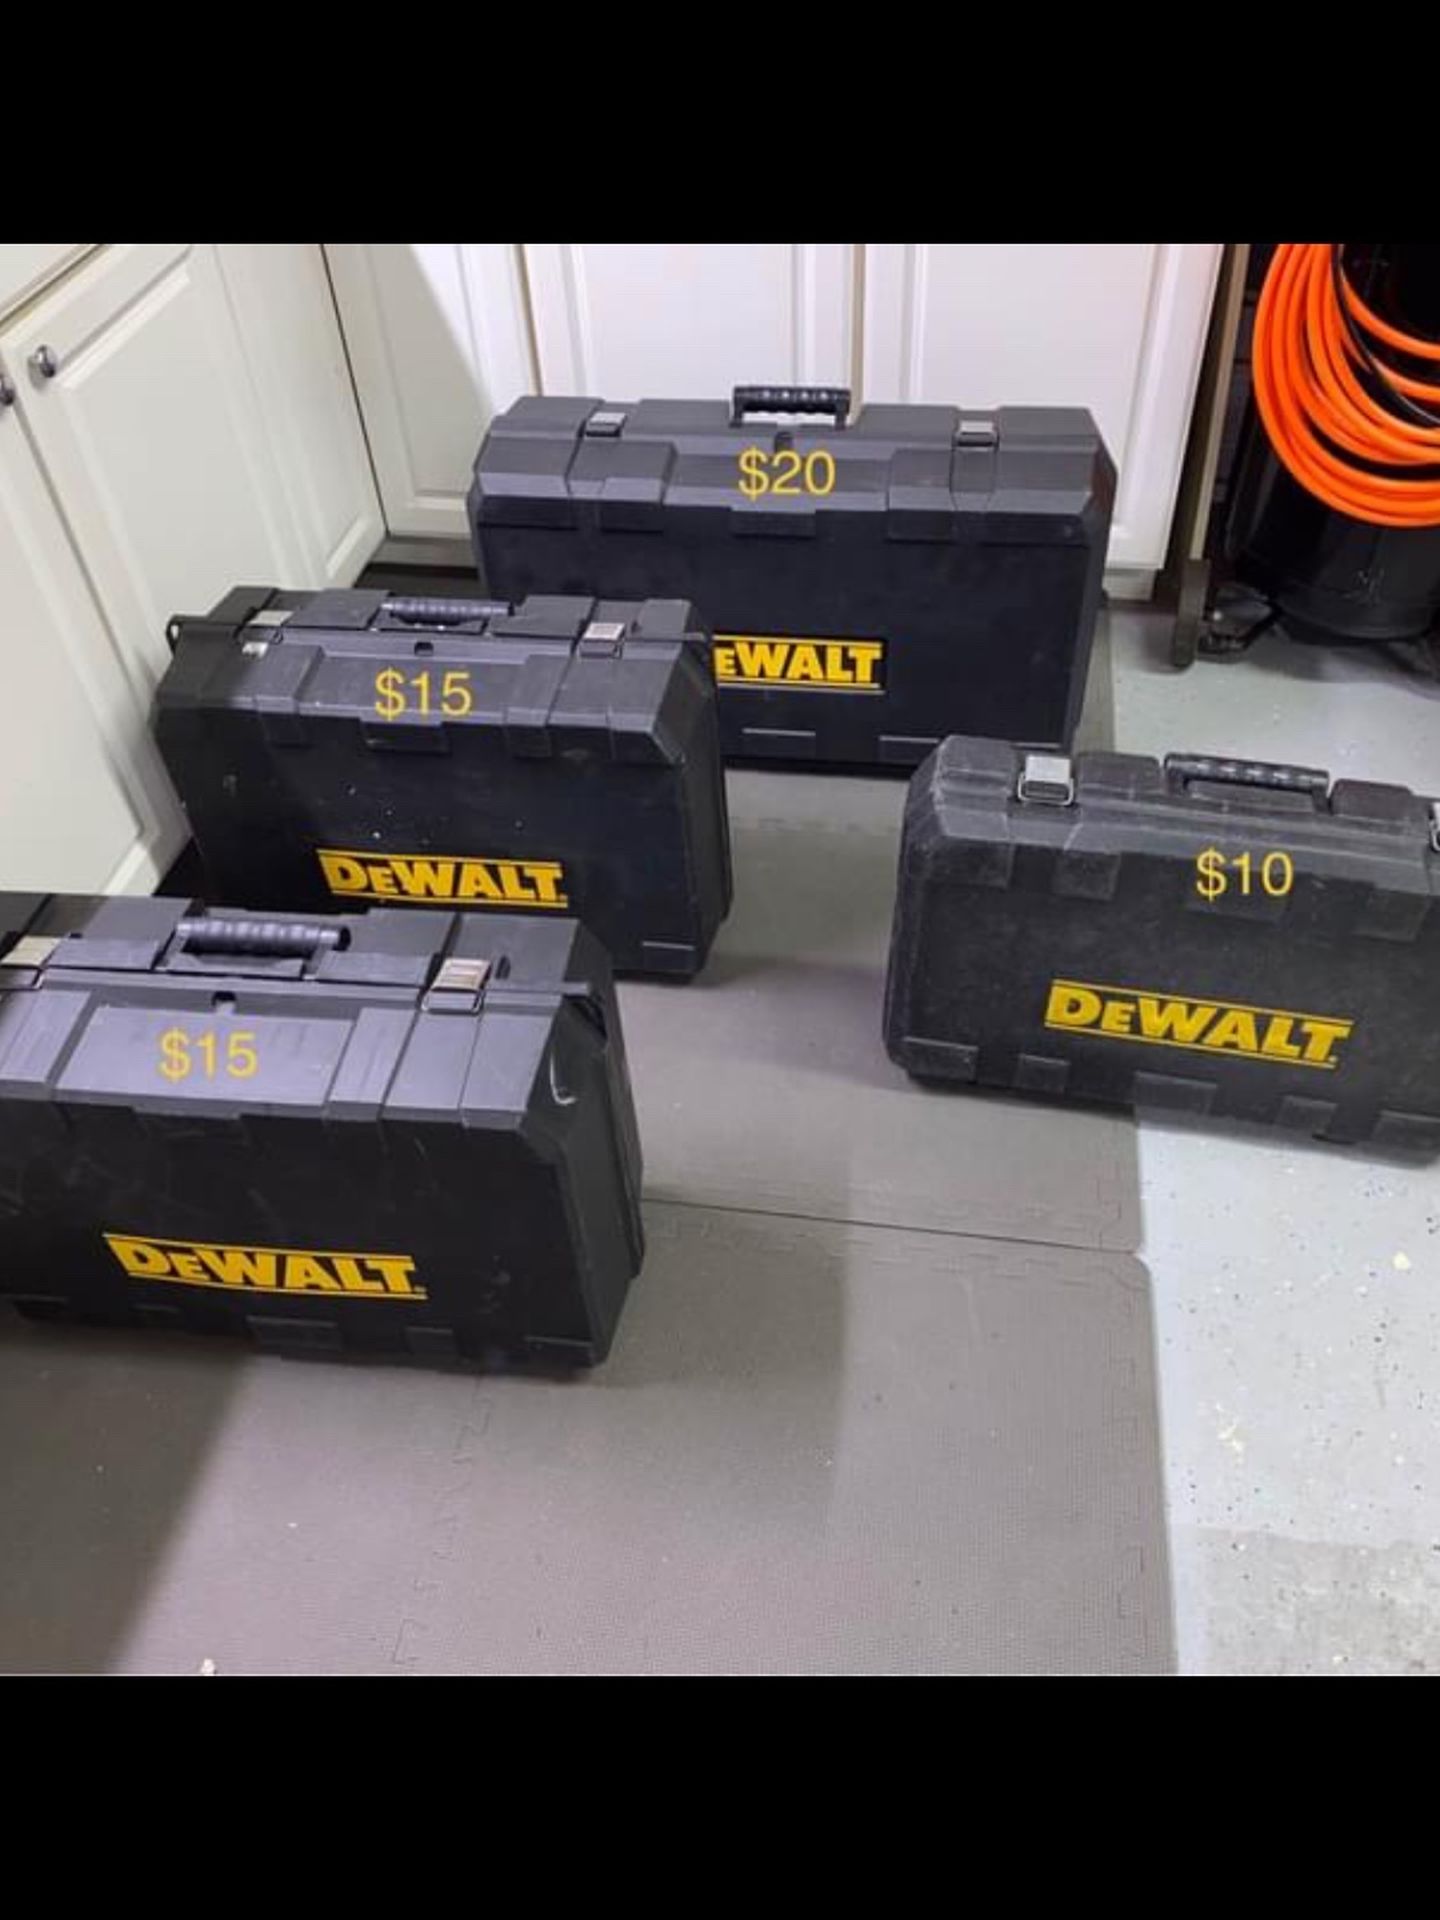 DeWalt empty tool boxes.